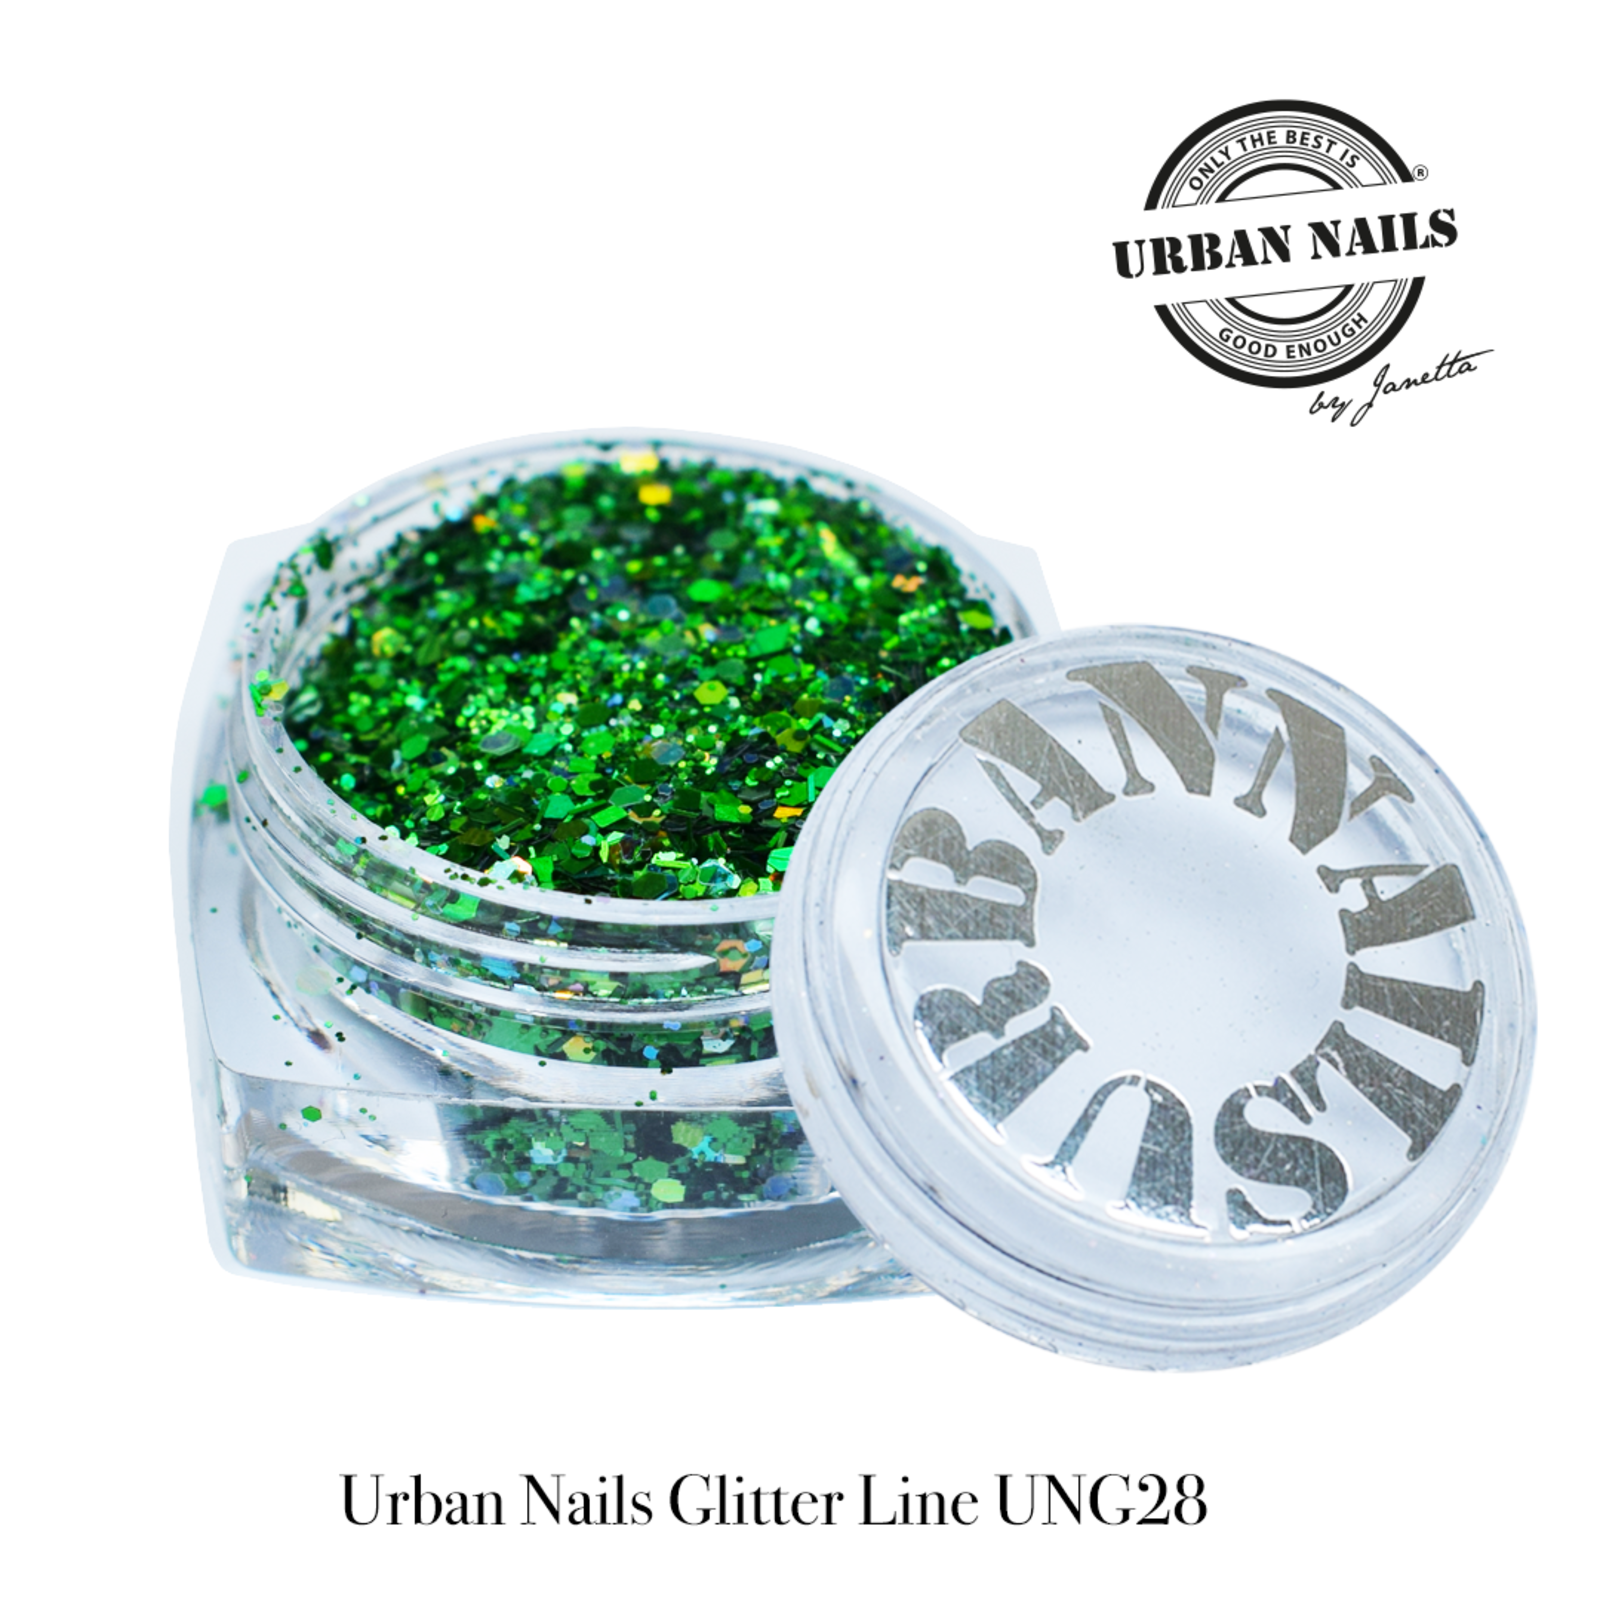 Urban nails Glitter Line UNG28